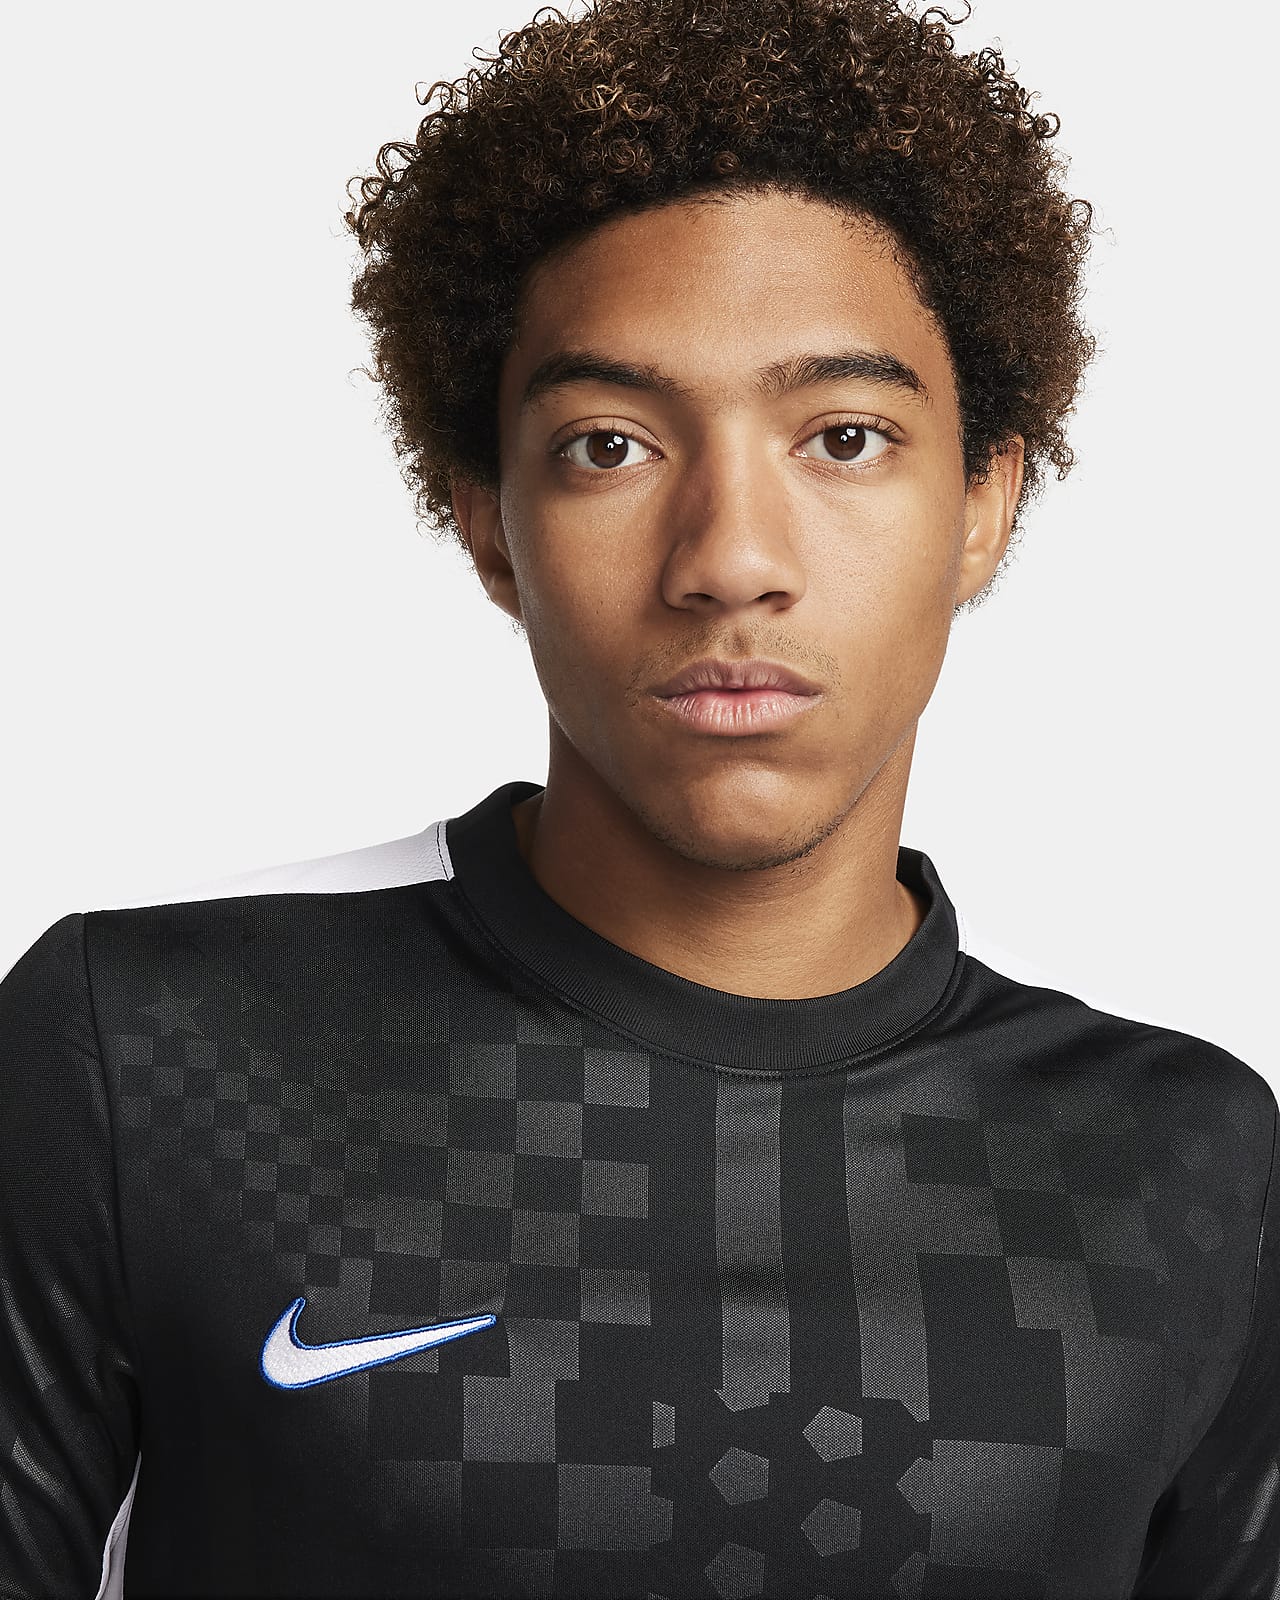 Men\'s Short-Sleeve Academy Soccer Nike Top. Dri-FIT